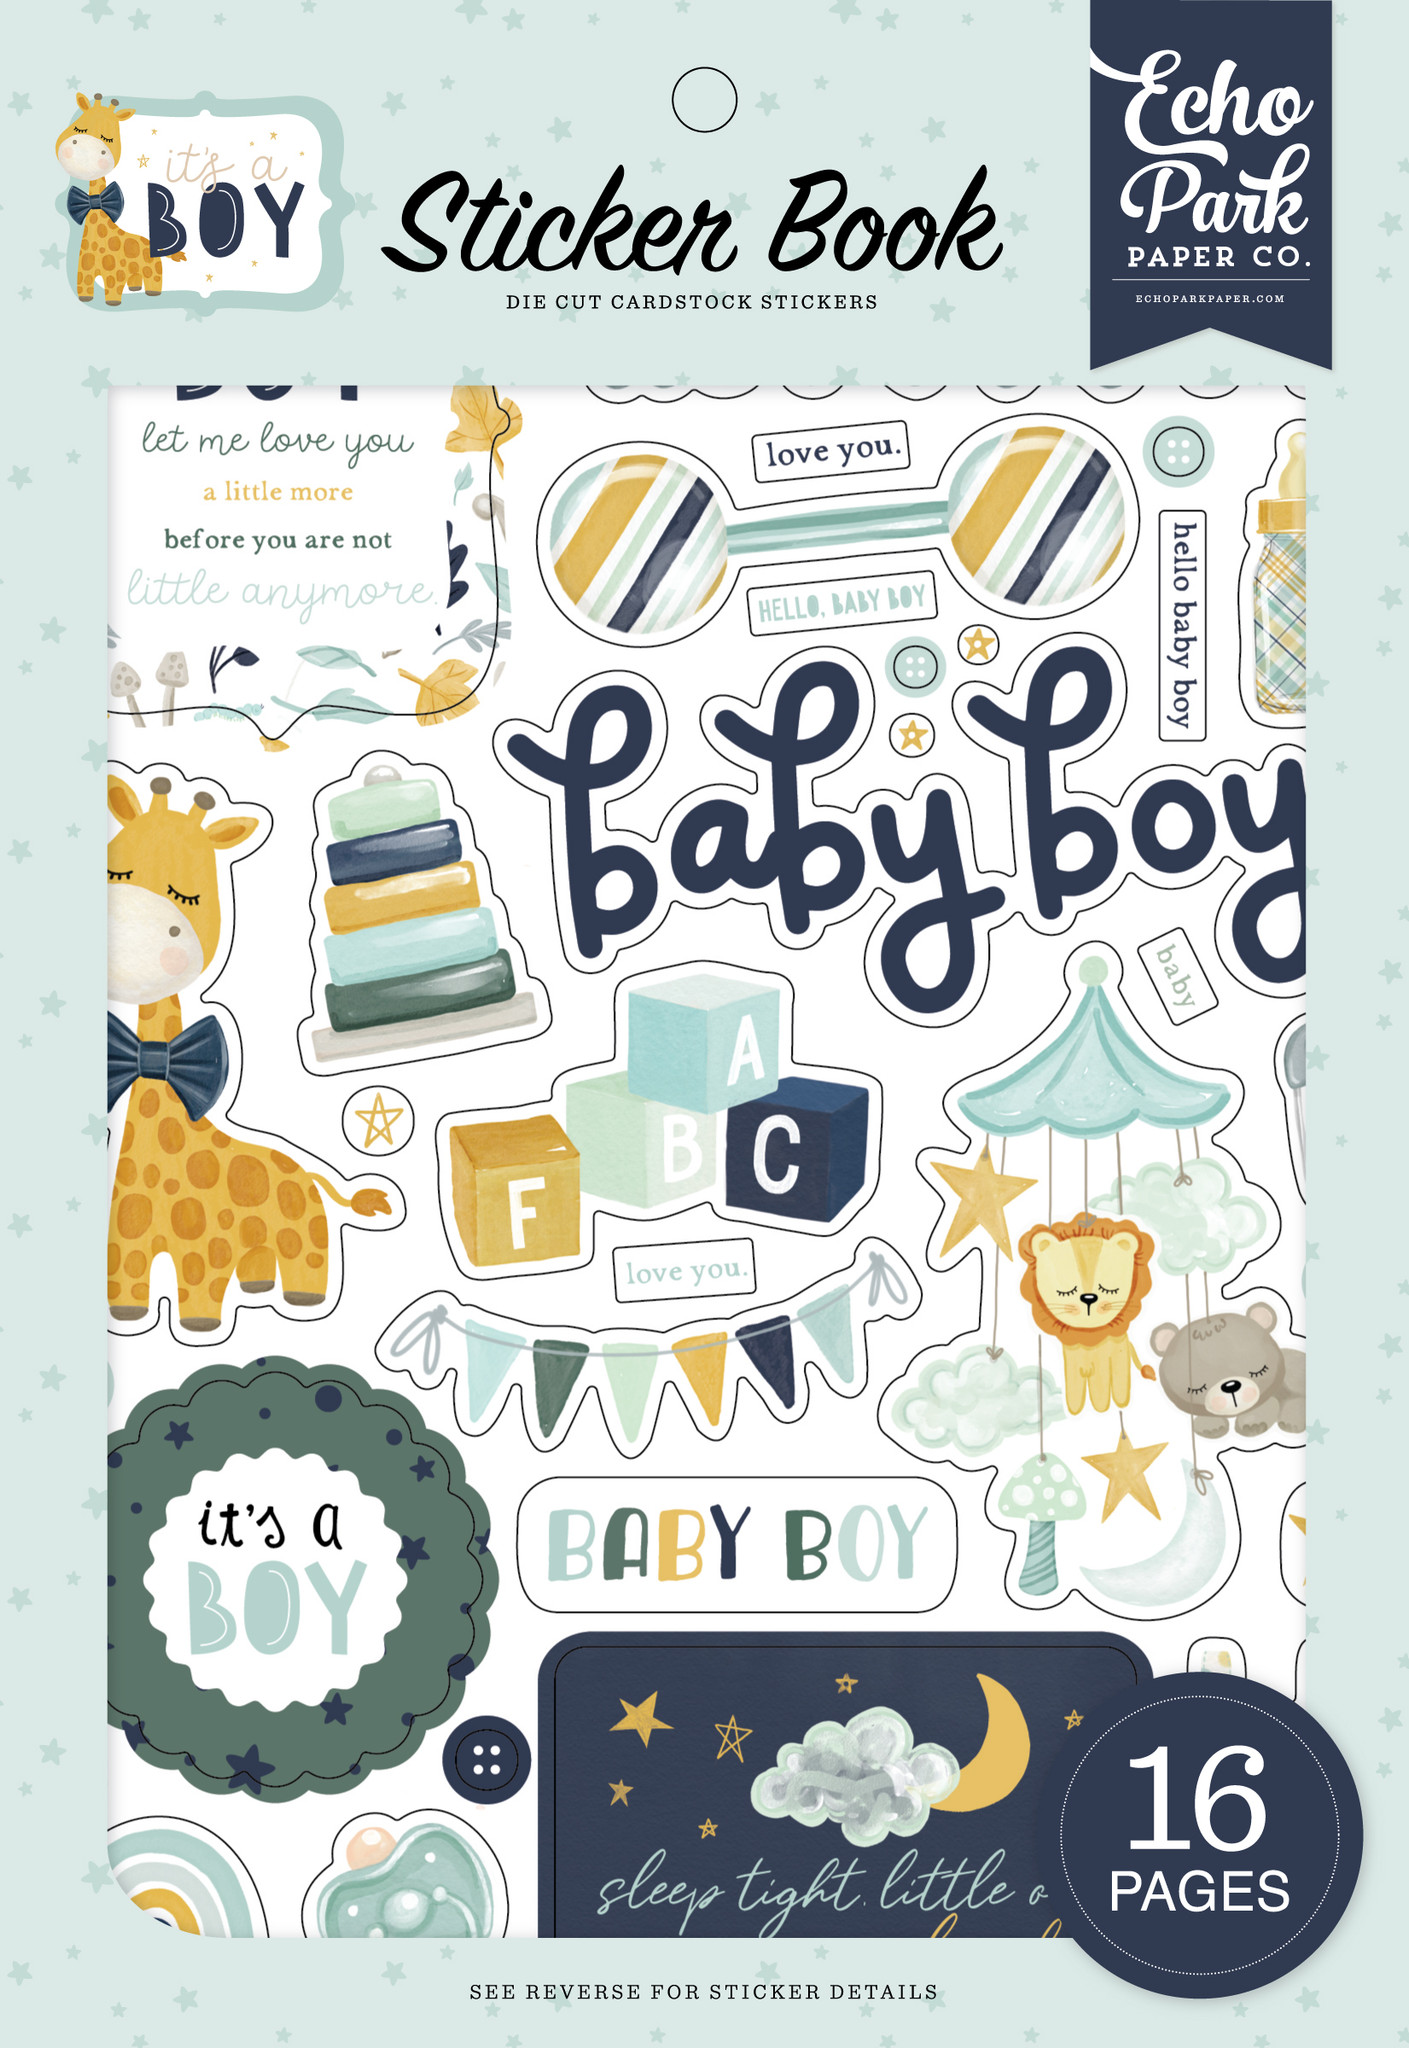 Welcome Baby Boy Sticker Book - Echo Park Paper Co.